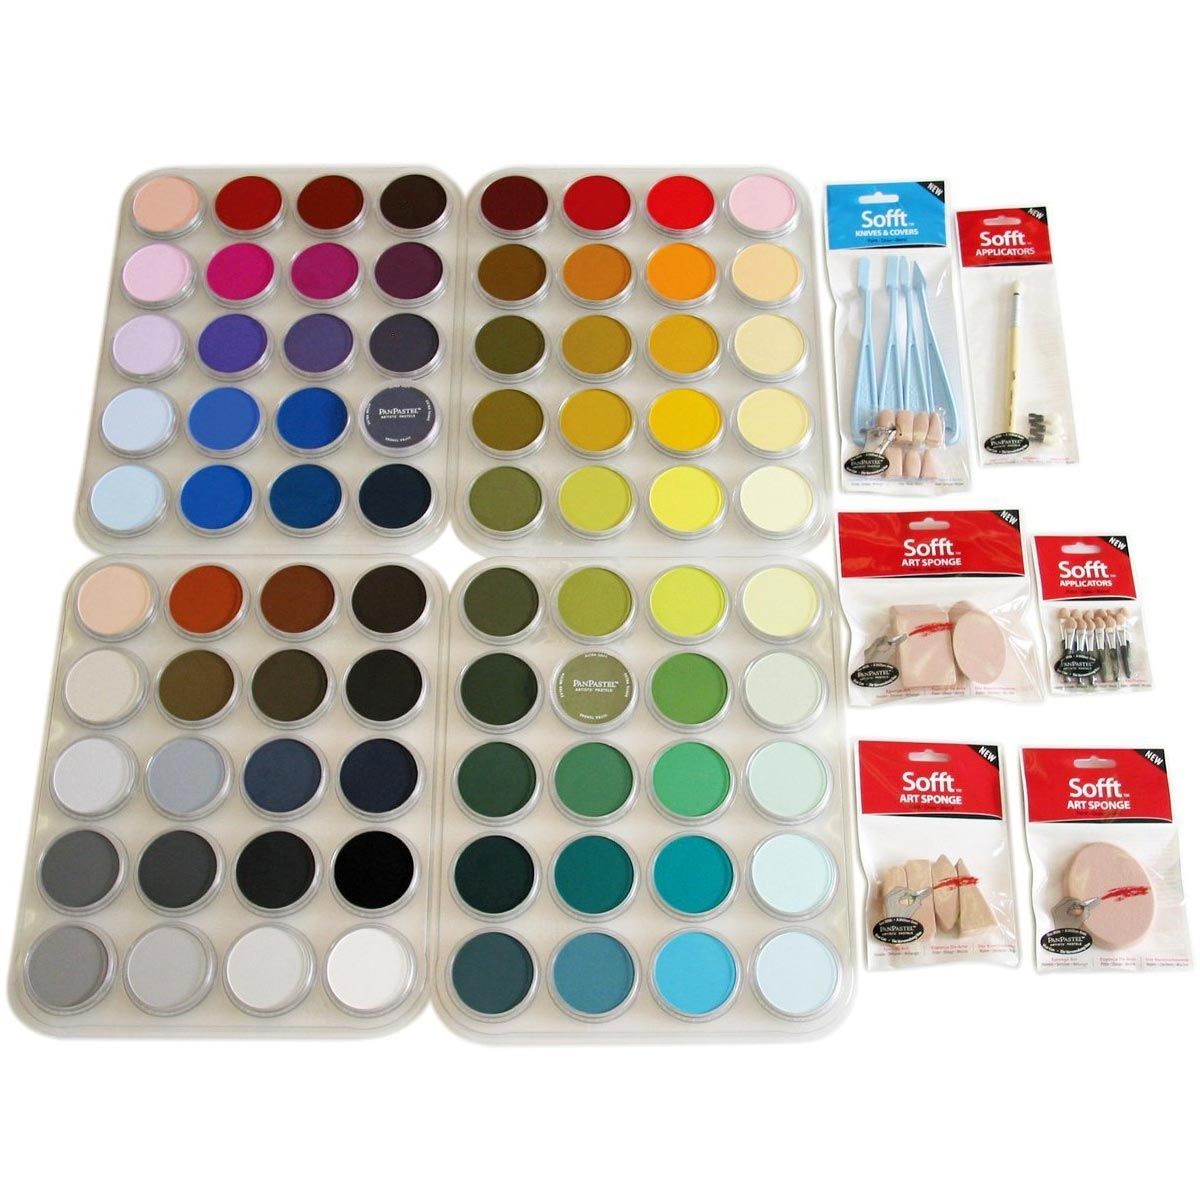 Pan Pastel Complete 80 Colour Set (Includes 4 Large Trays)